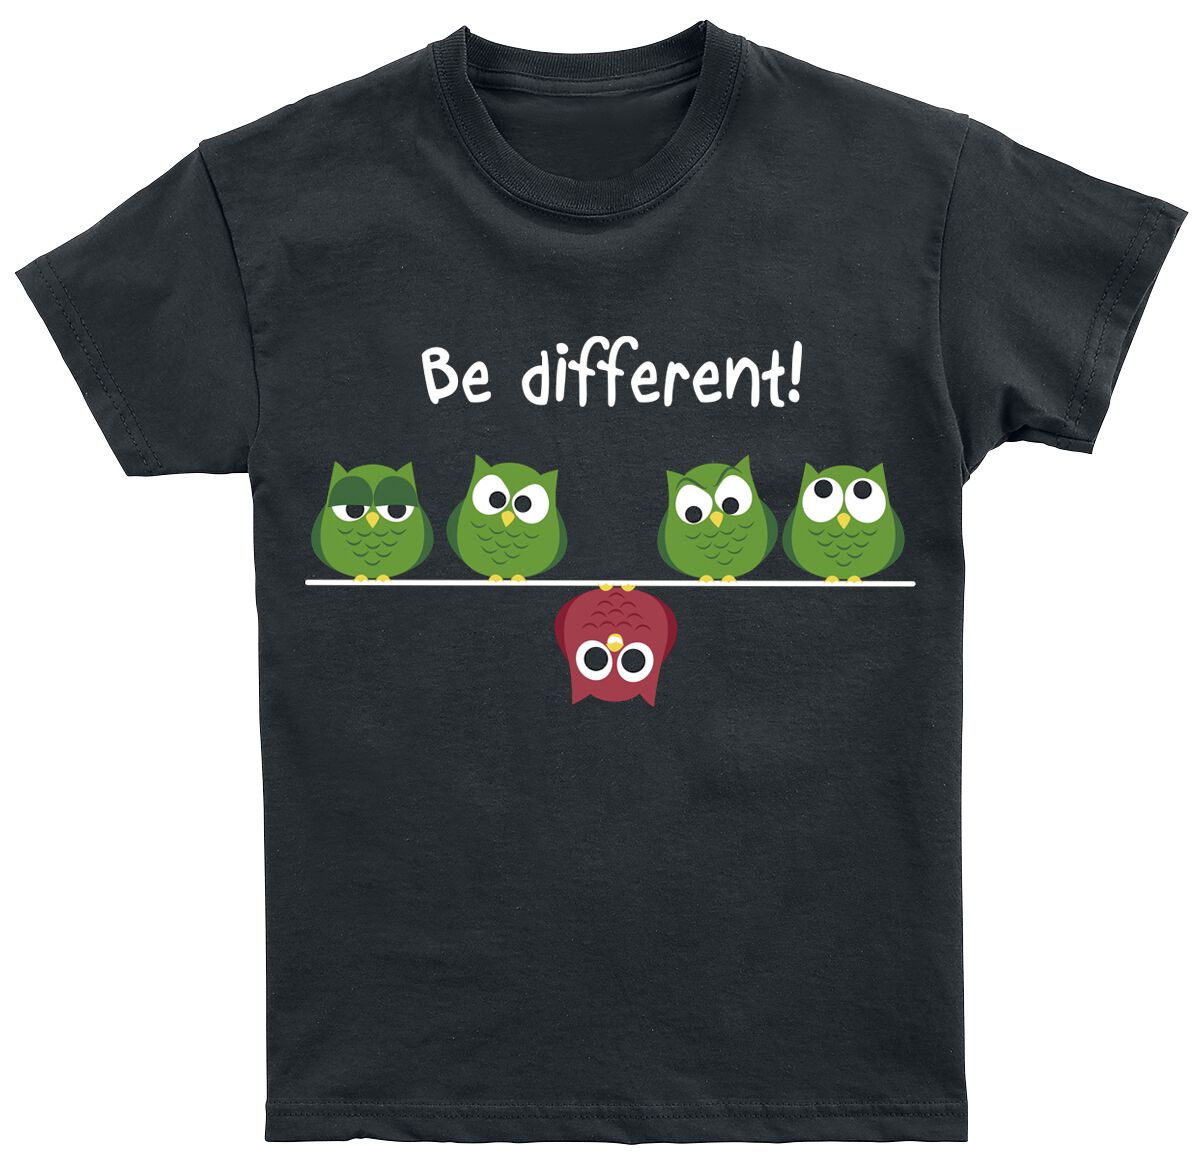 Be Different! - Kids - Be Different! - T-Shirt - schwarz - EMP Exklusiv!